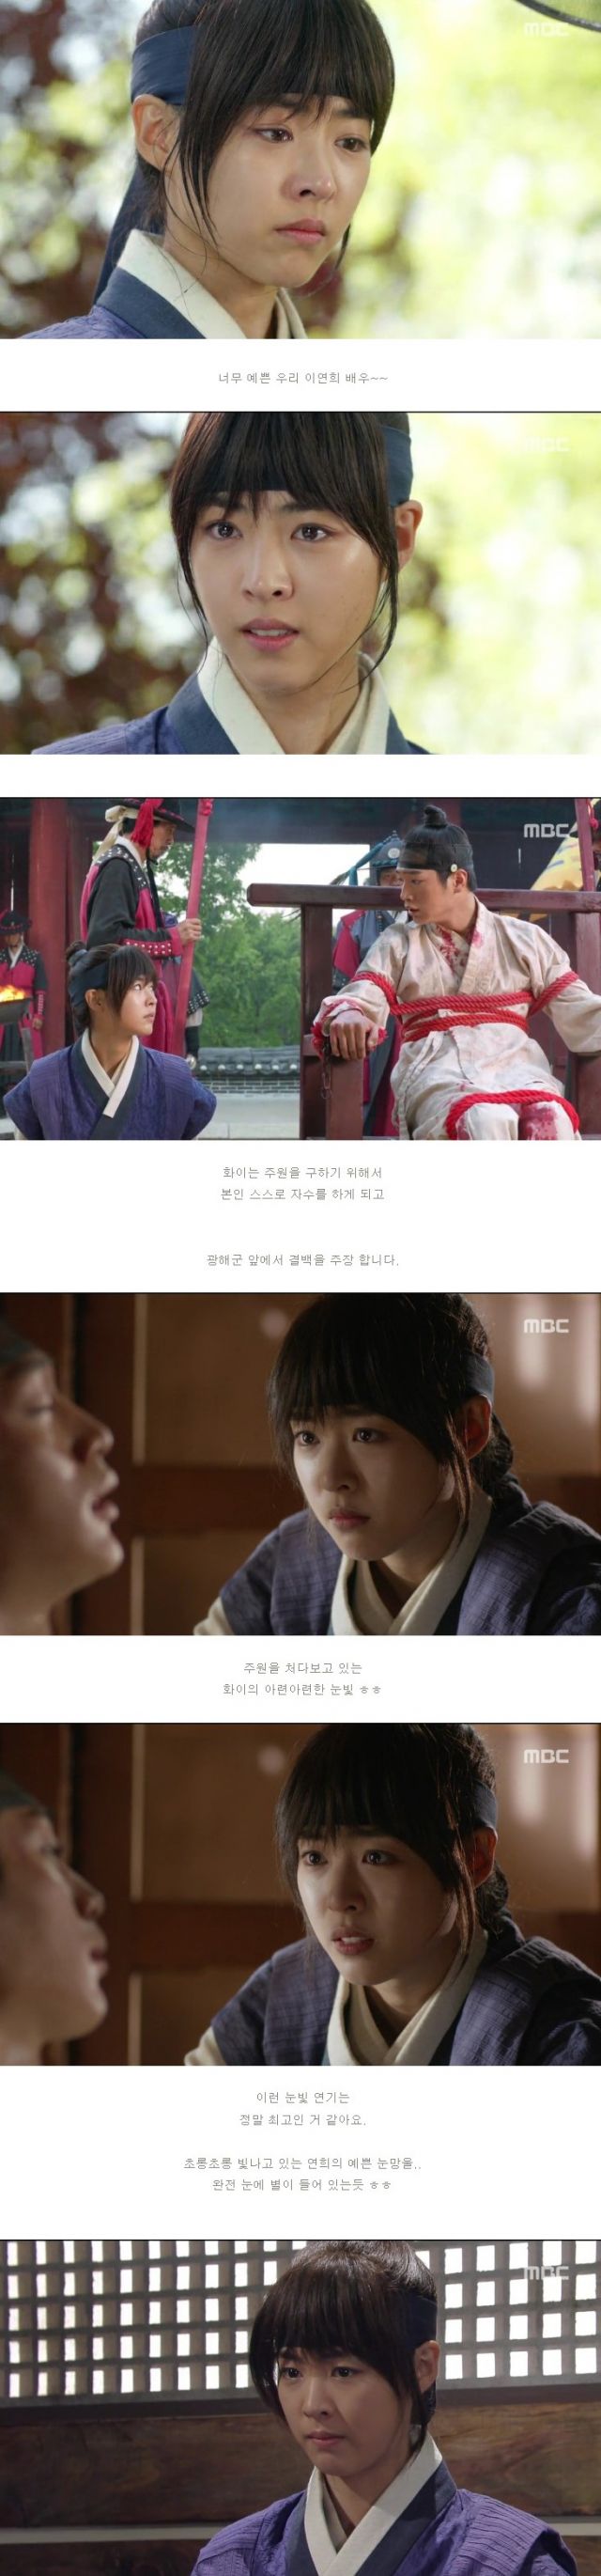 episode 14 captures for the Korean drama 'Splendid Politics'